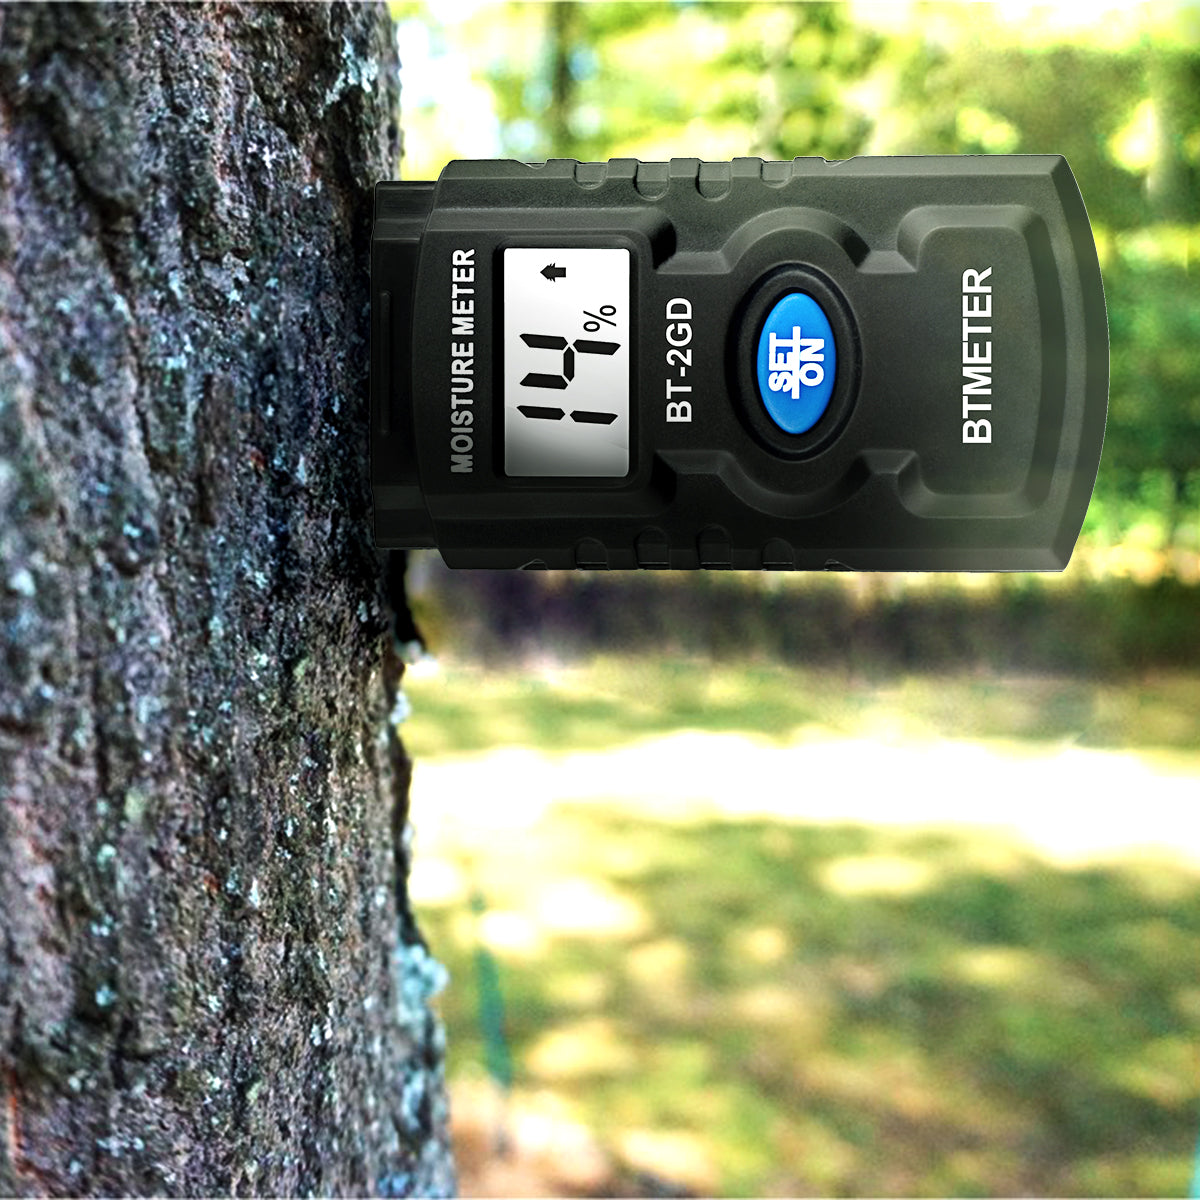  wood moisture meter